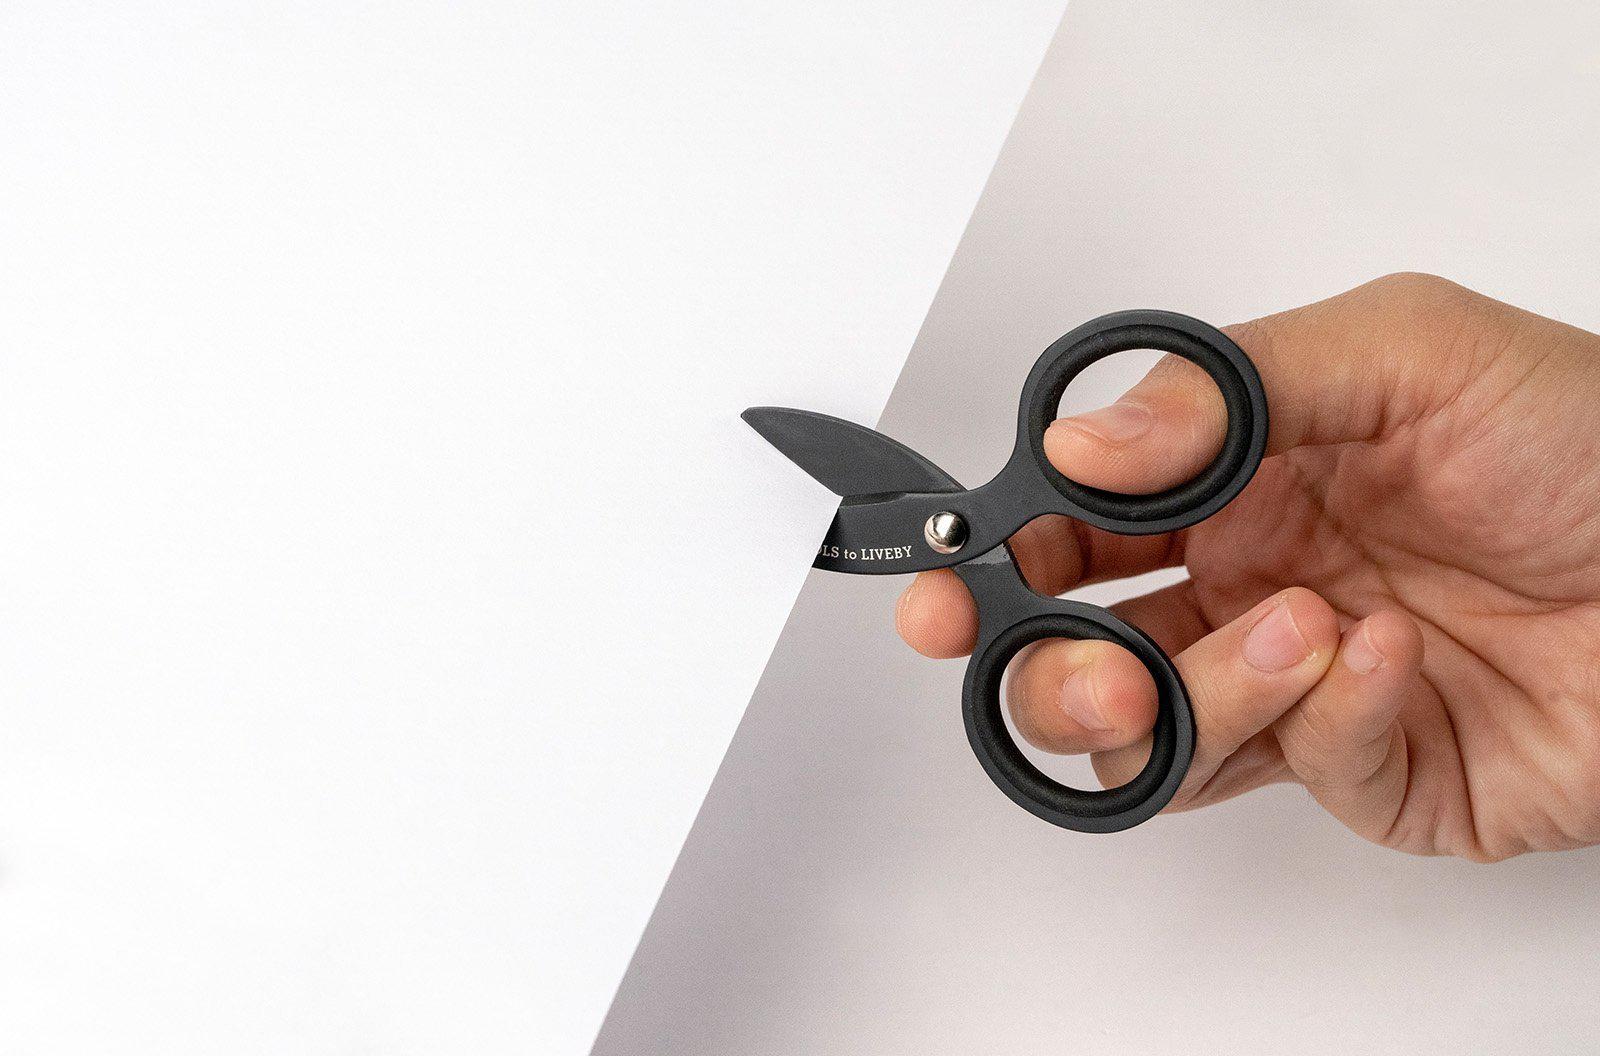 Mini Black Scissors 3 - Flight Friendly - Galen Leather